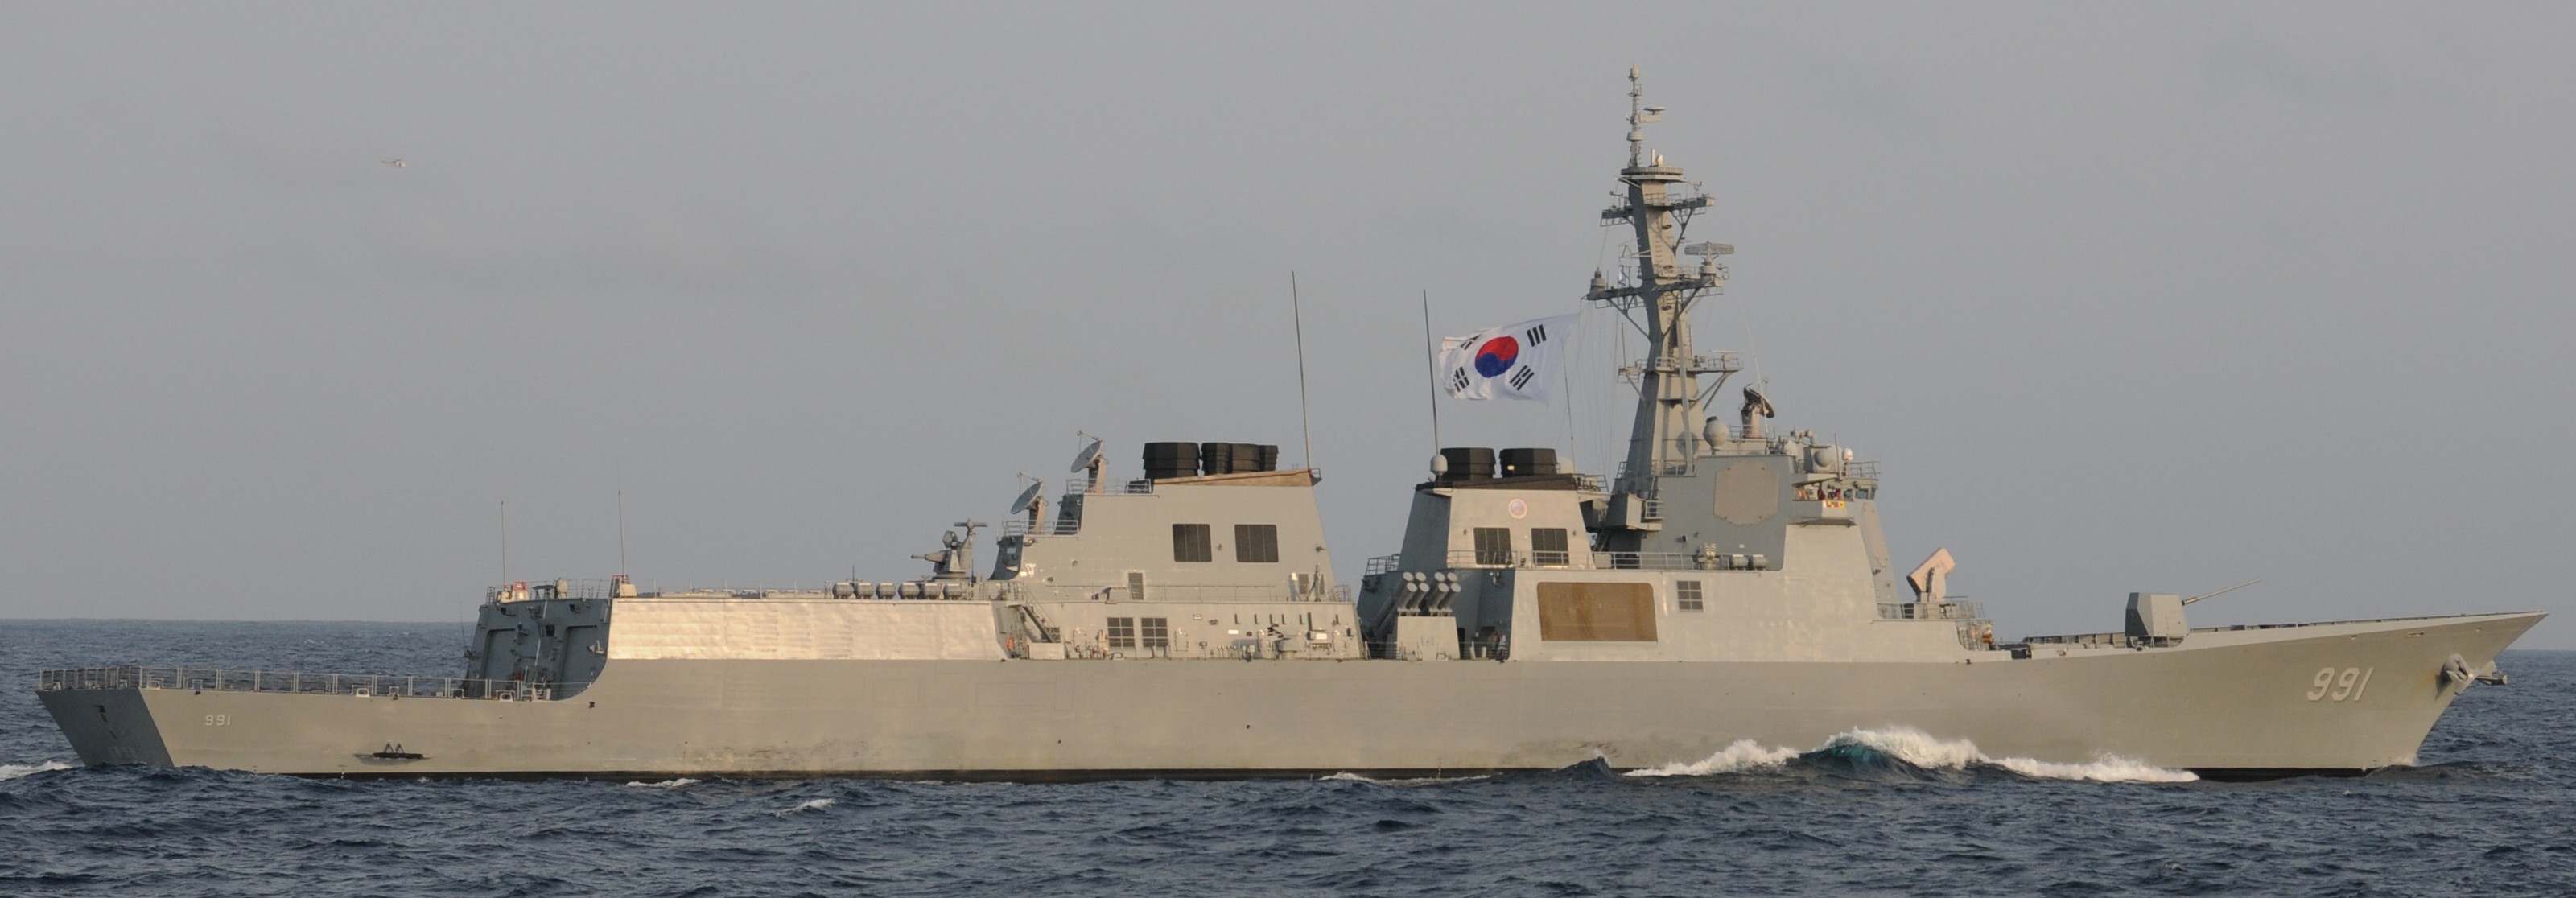 ddg-991 roks sejong the great guided missile destroyer aegis republic of korea navy rok 07